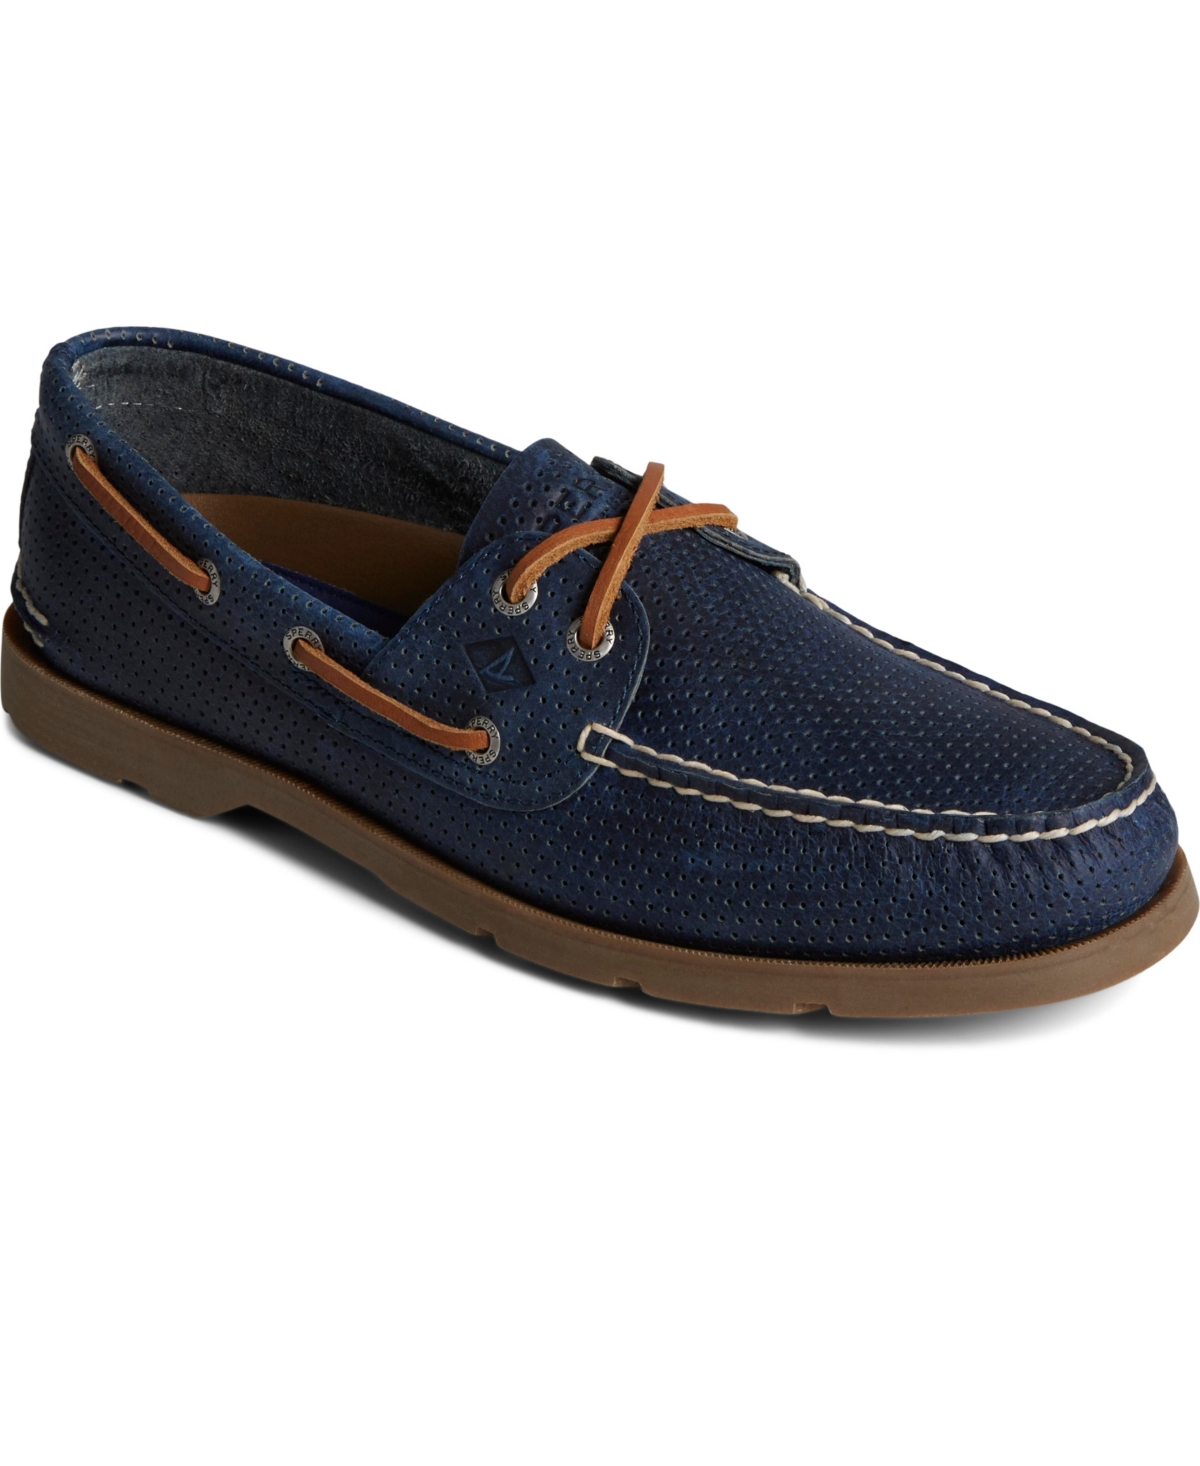 Men's Leeward 2-Eye Slip-On Boat Shoes - Navy